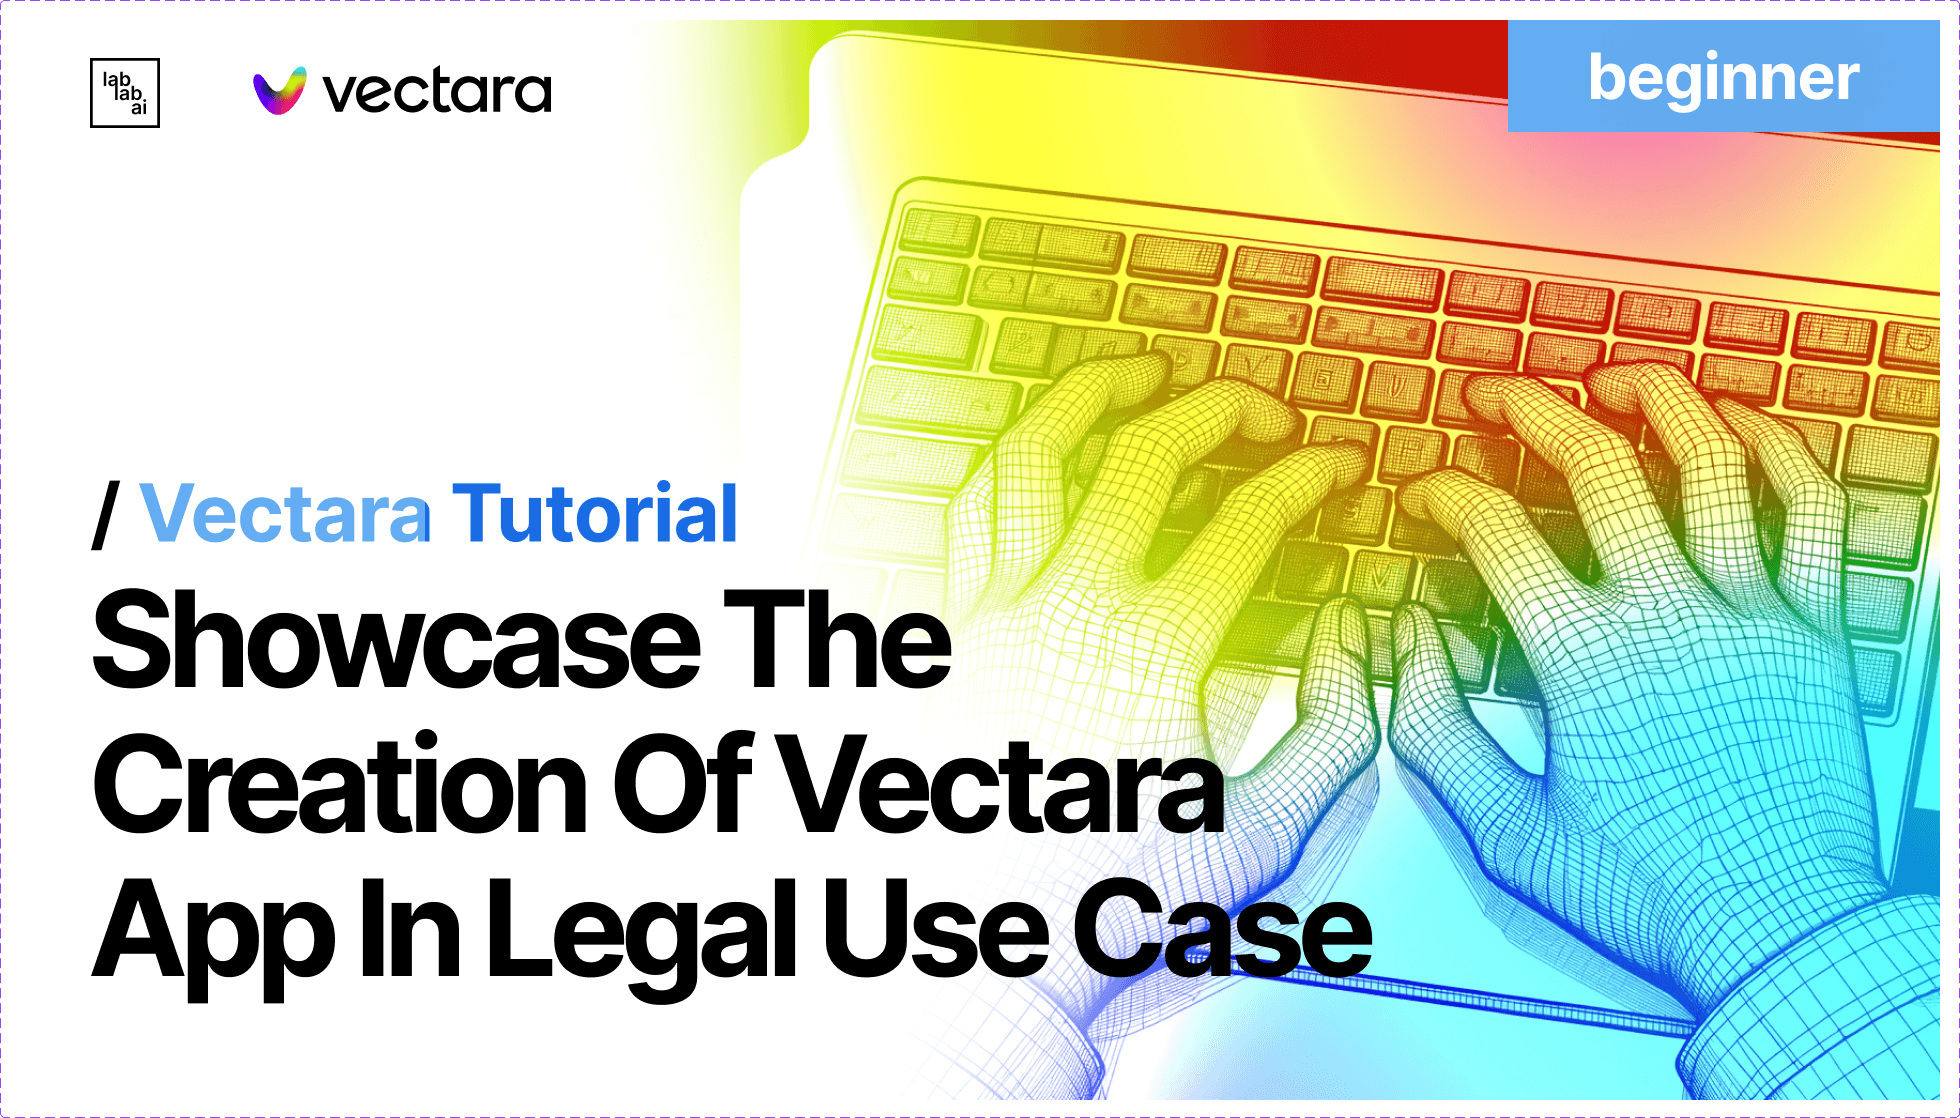 Vectara Beginner App Tutorial: Showcase The Creation Of Vectara App In Legal Use Case